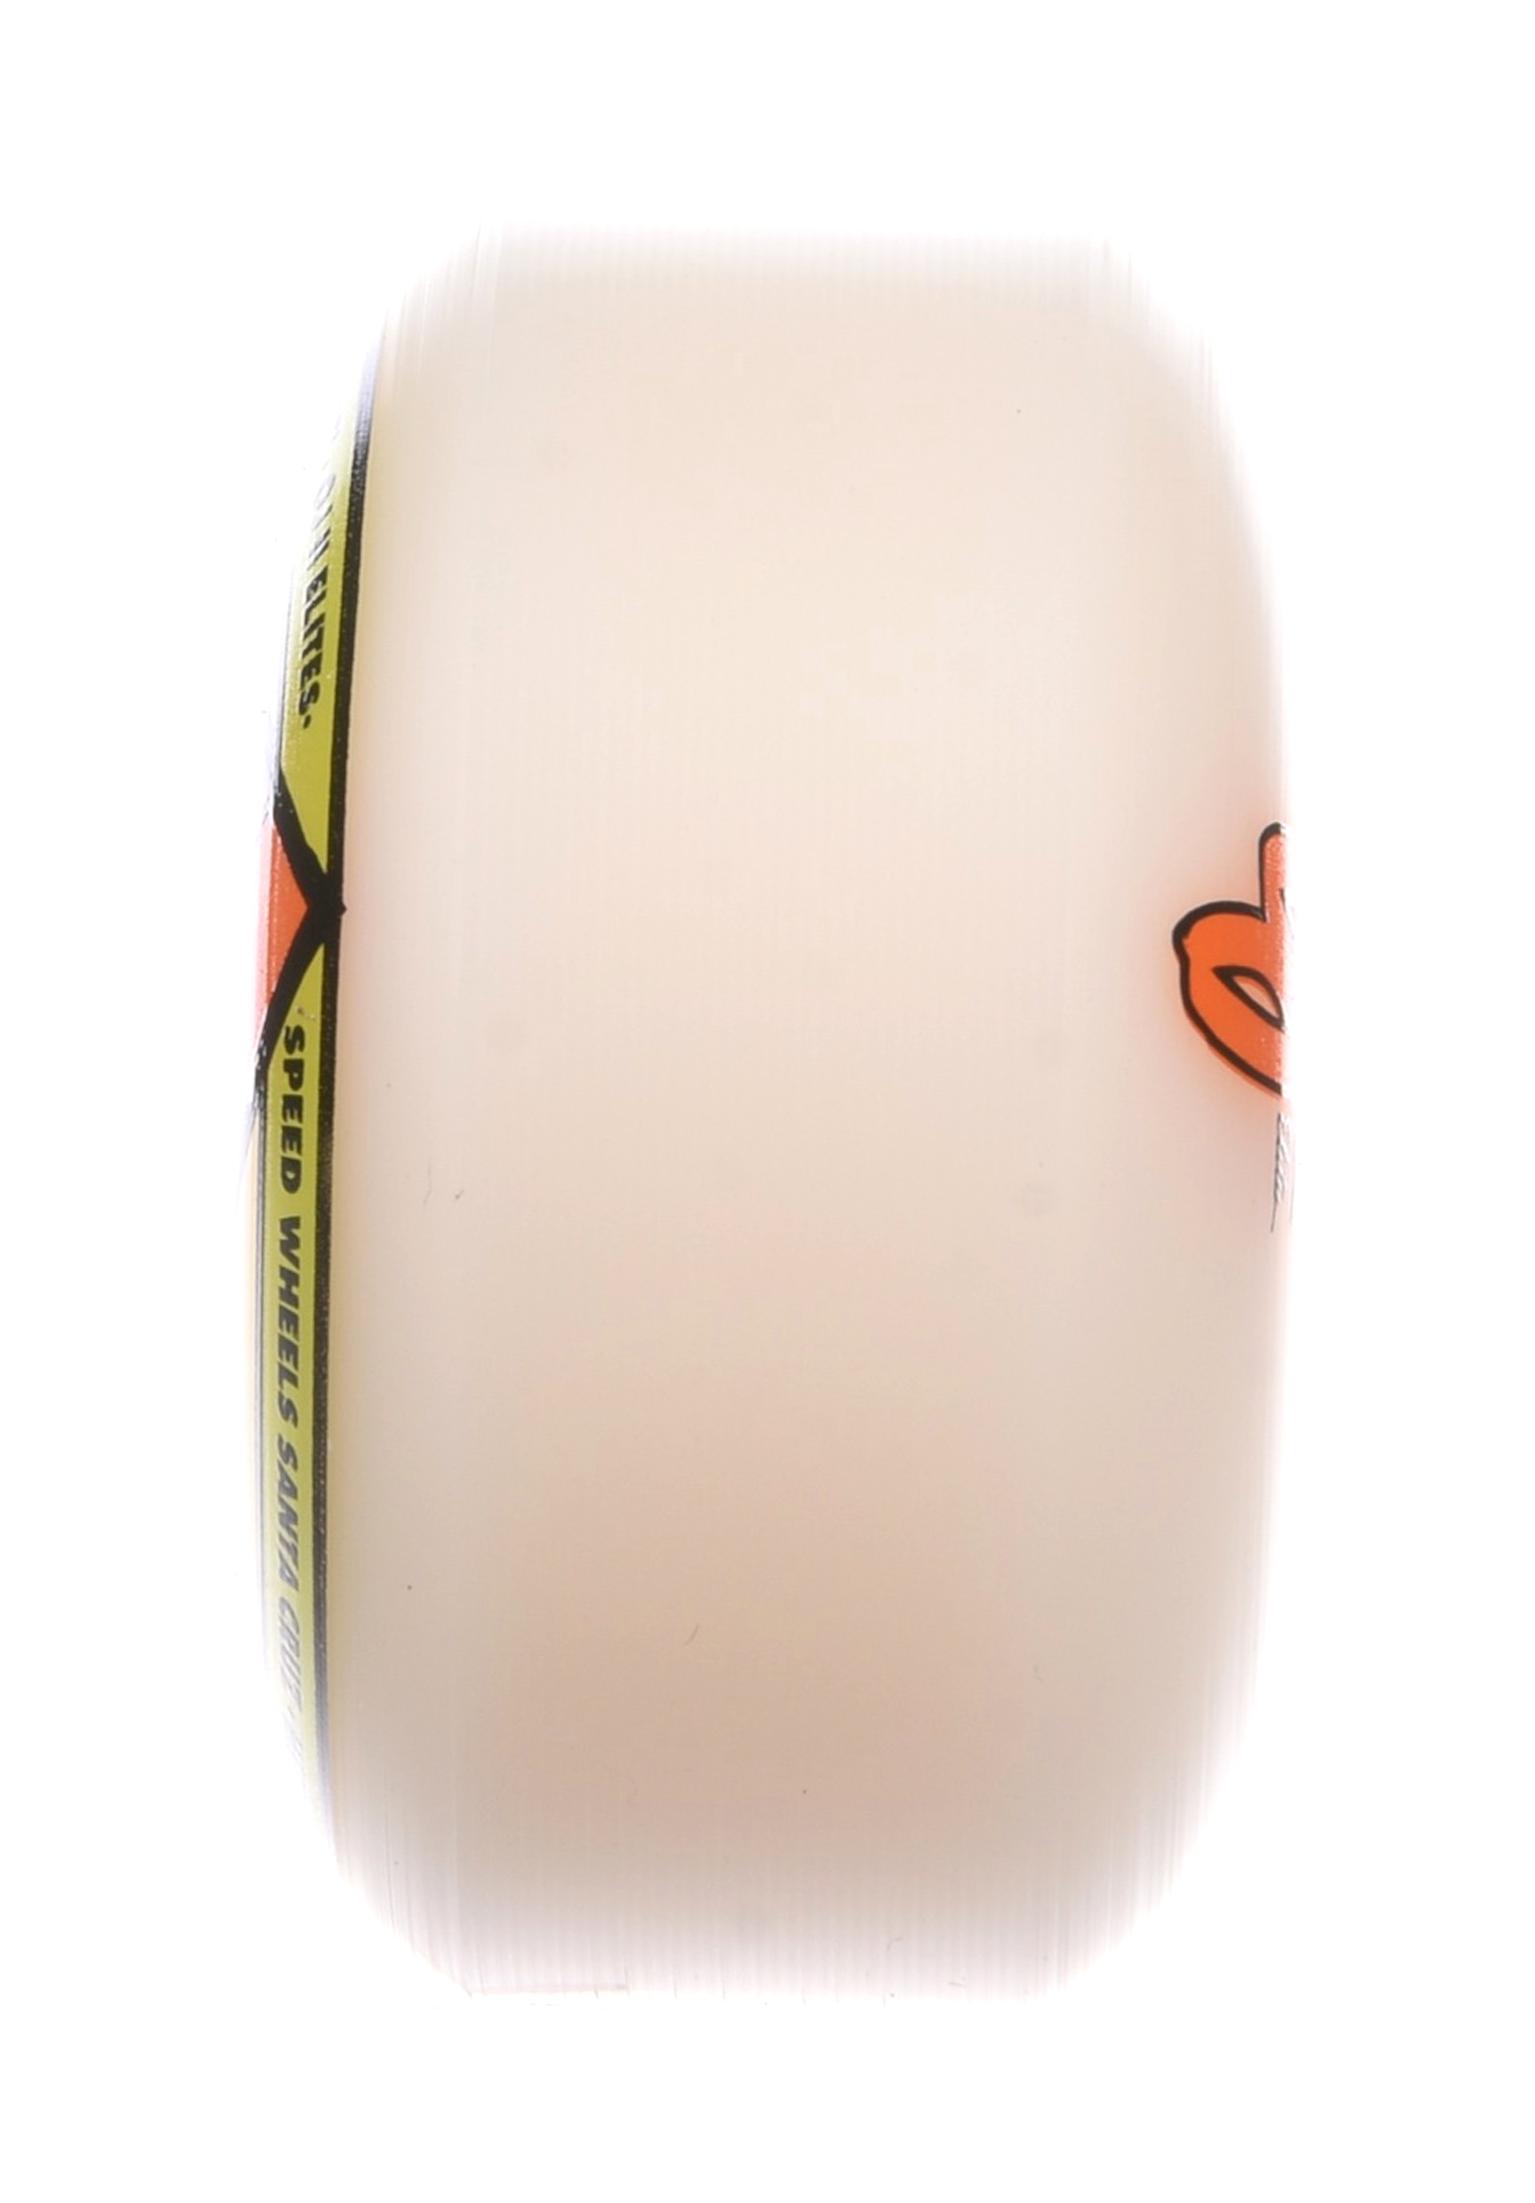 OJ Wheels 53mm Elites EZ Edge 101a skateboardwielen white